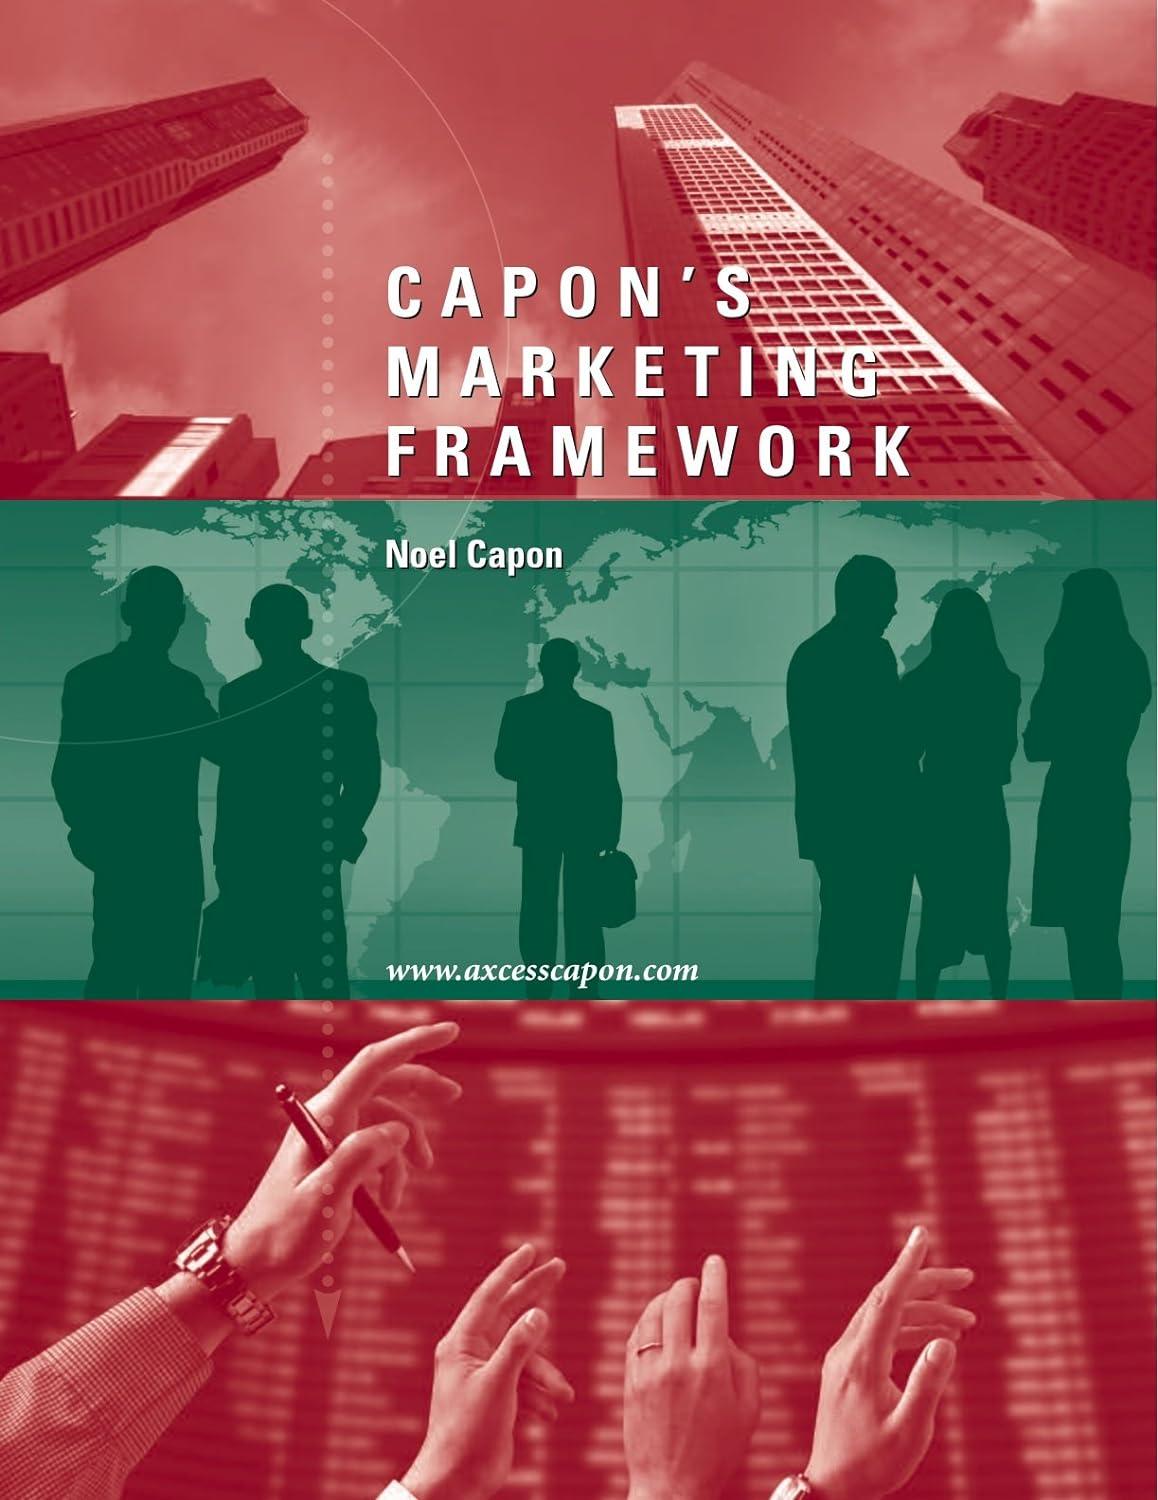 capons marketing framework 1st edition noel capon 0979734460, 978-0979734465